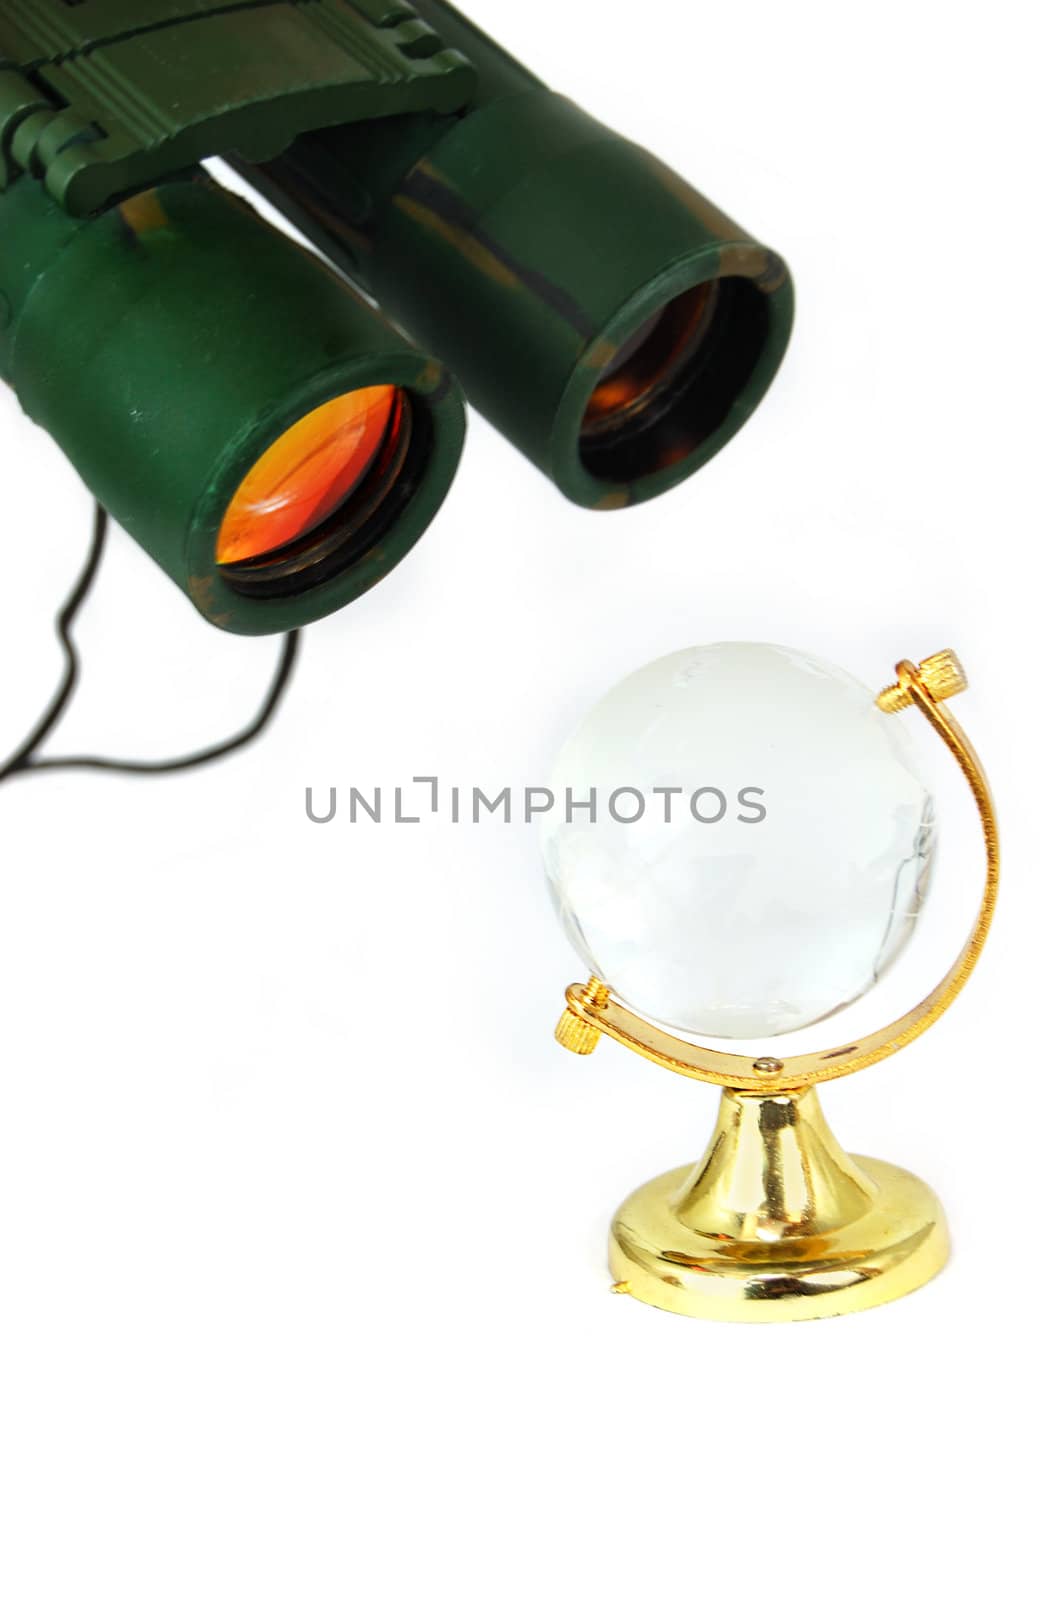 military binoculars directed on globe, isolated on white